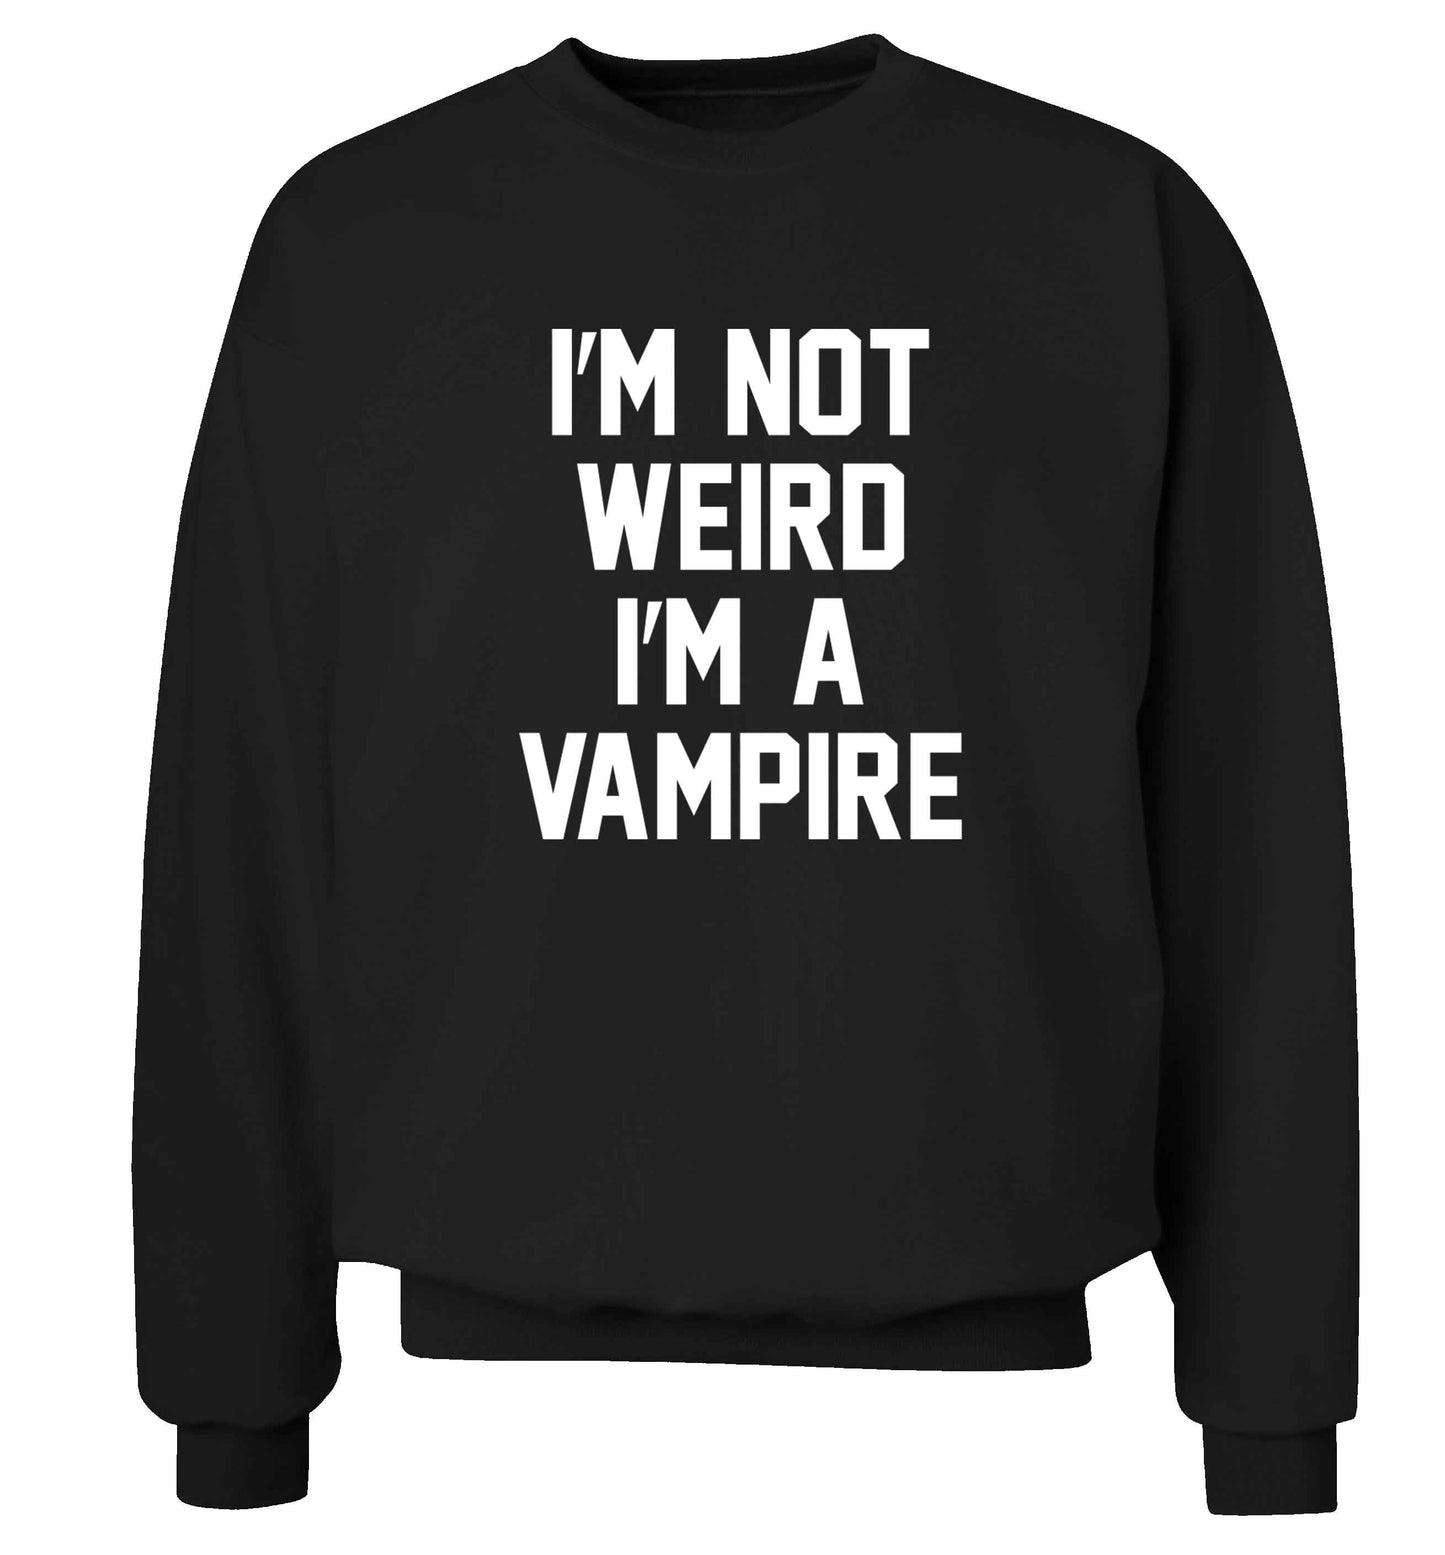 I'm not weird I'm a vampire adult's unisex black sweater 2XL